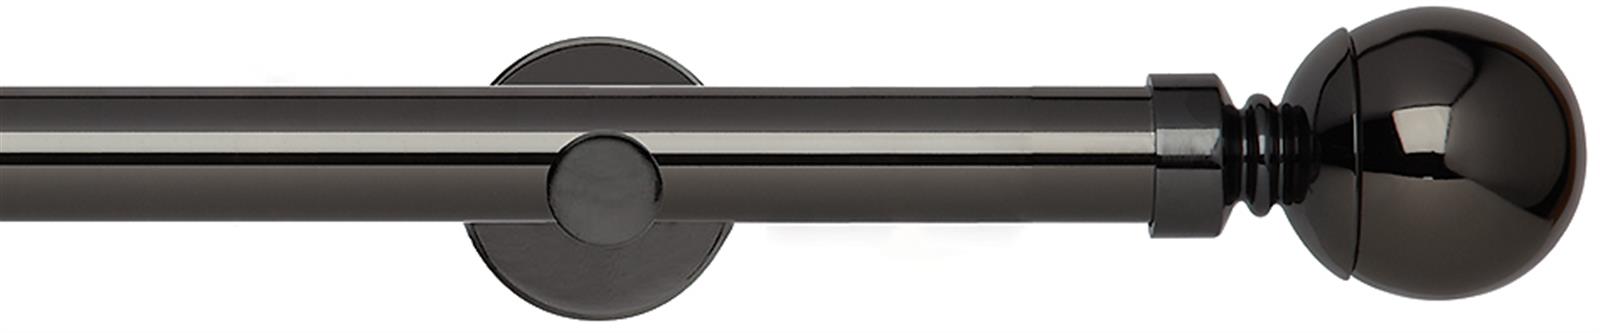 Neo 28mm Eyelet Pole Black Nickel Cylinder Ball